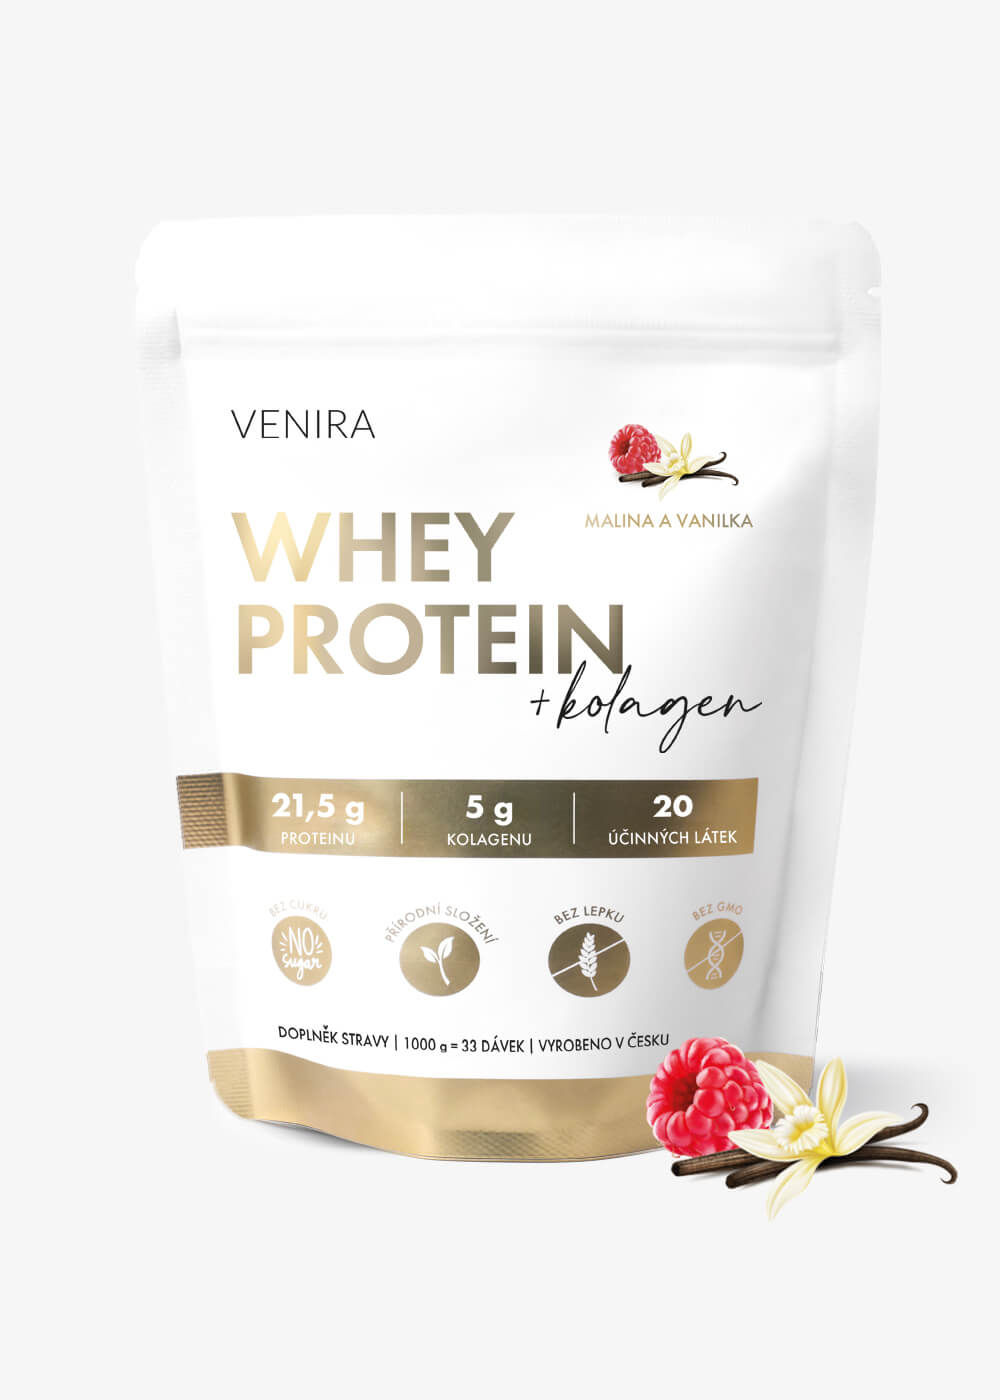 E-shop VENIRA whey proteín, malina-vanilka, 1000 g malina-vanilka, 1000 g